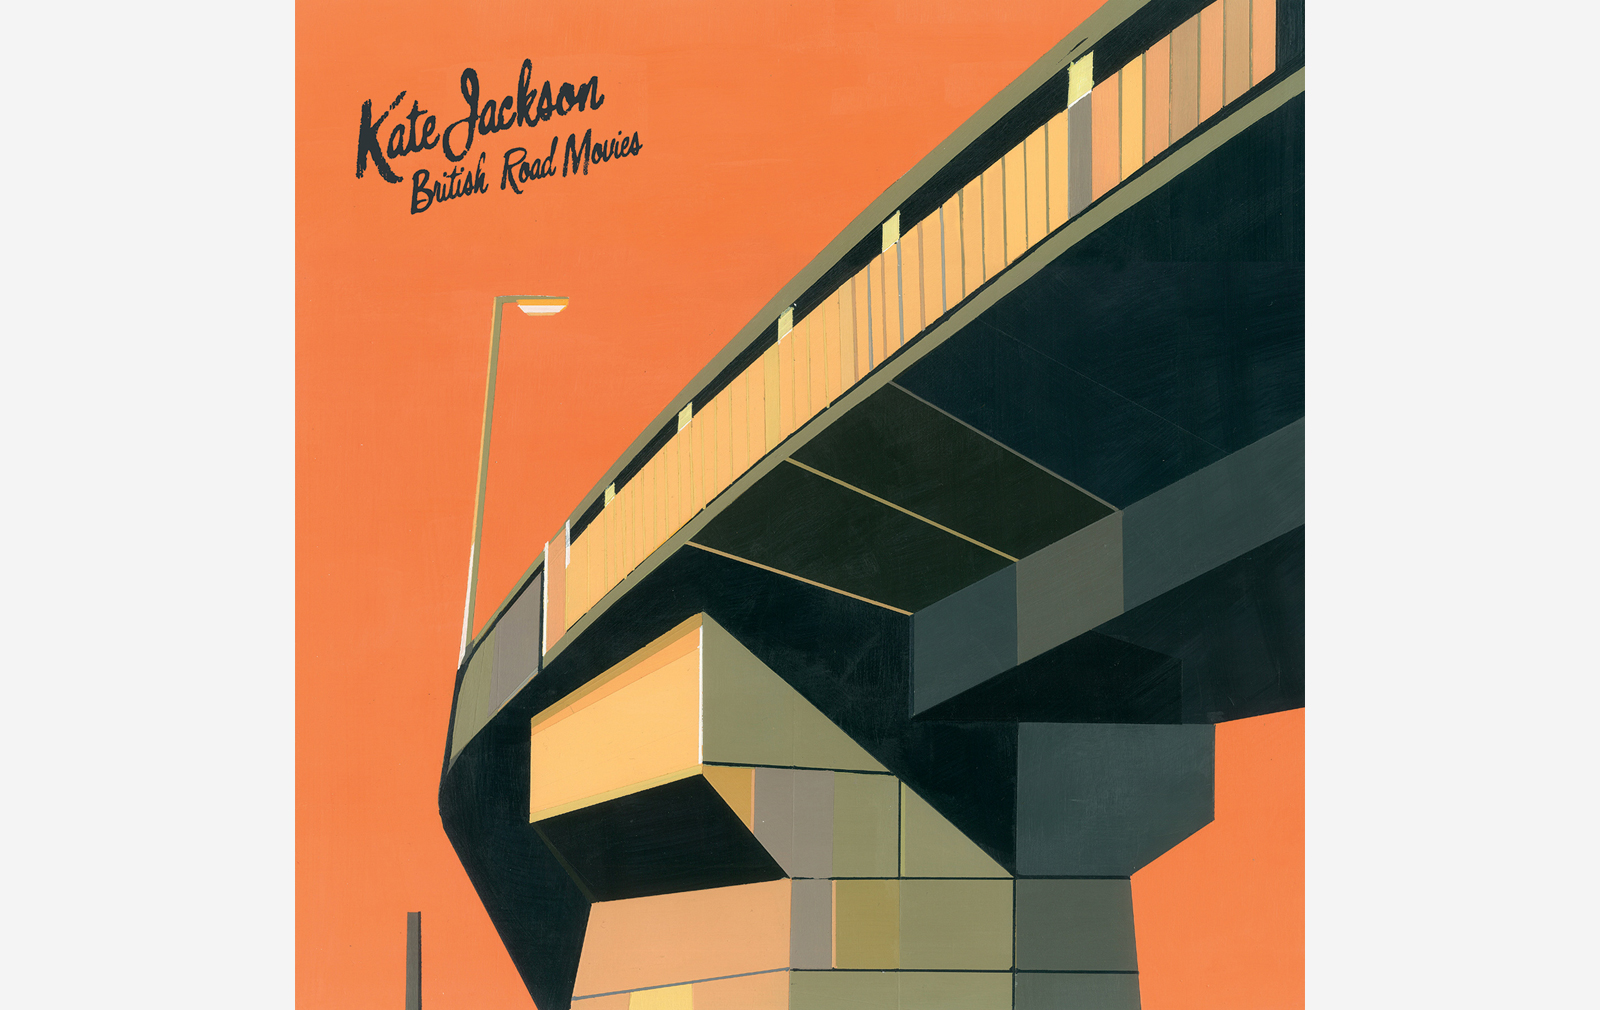 British Road Movies artwork by Kate Jackson